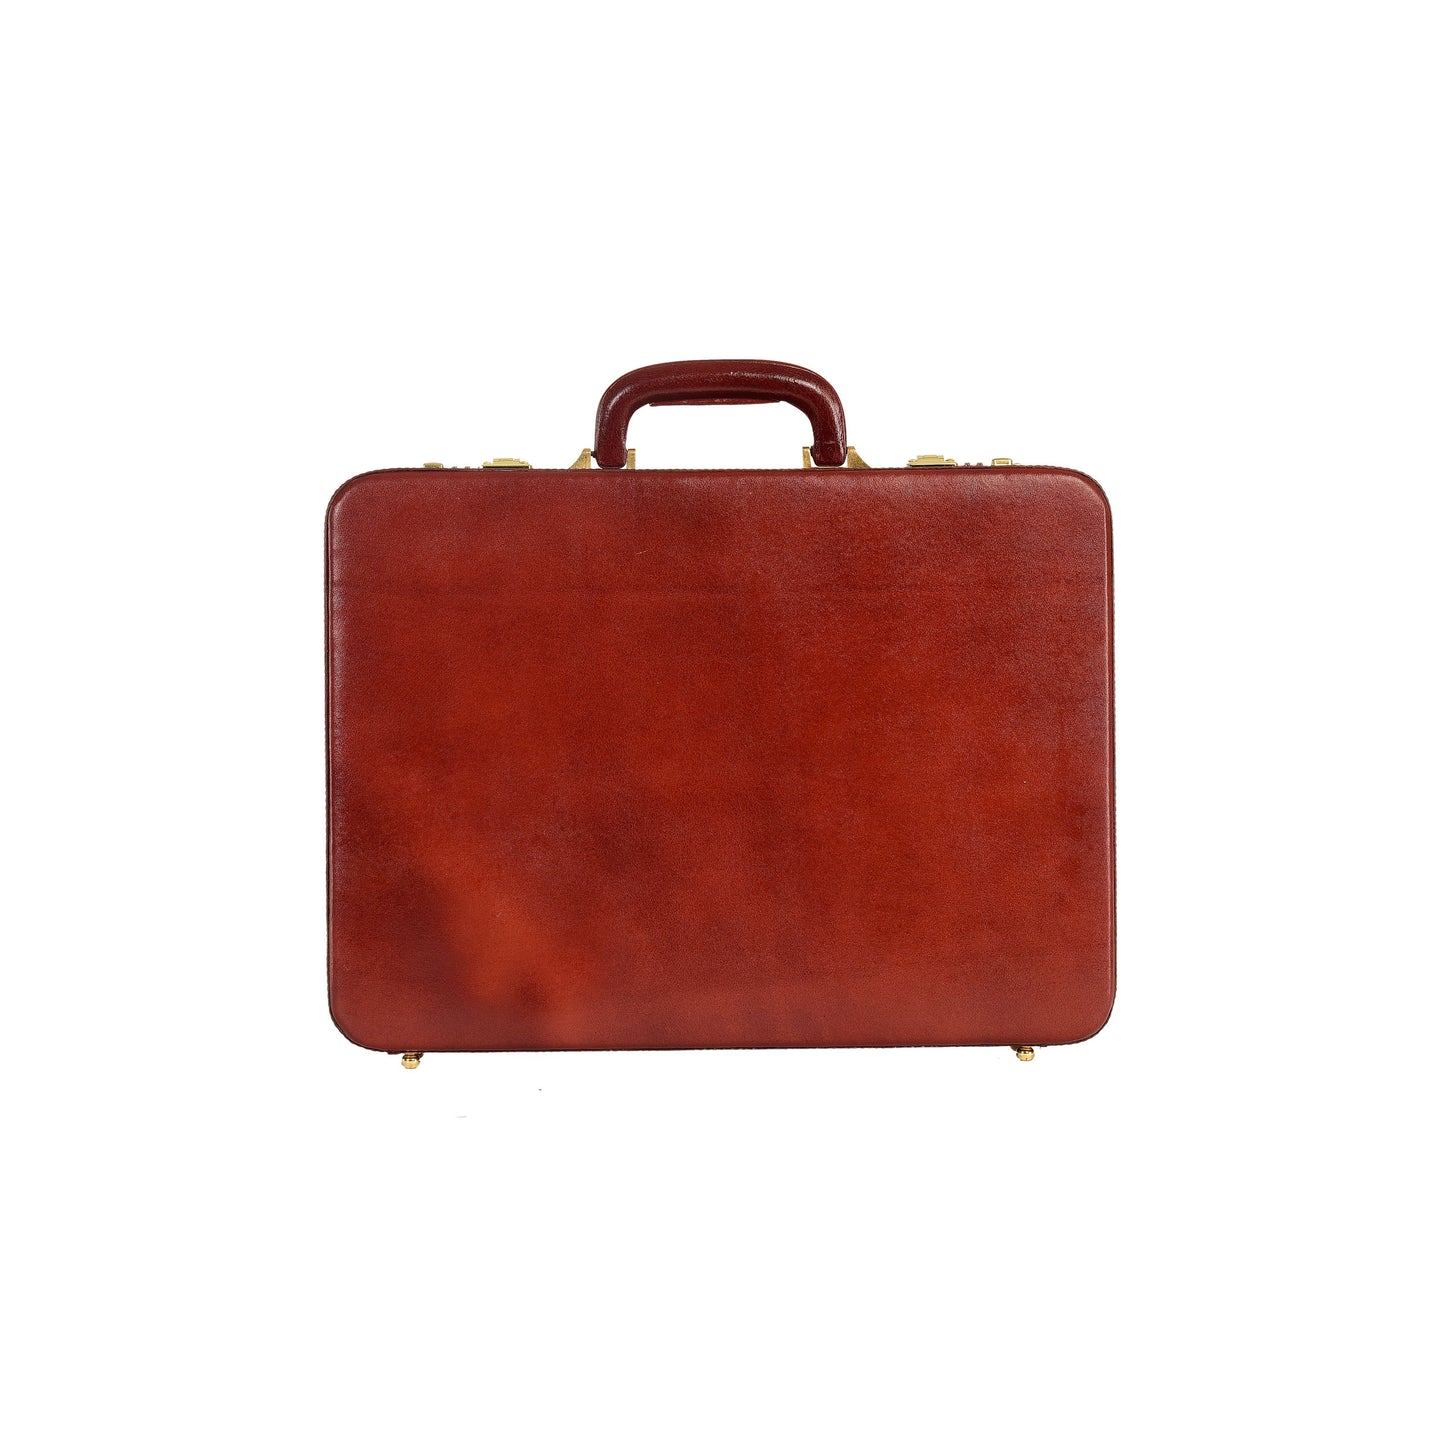 Genuine Leather Briefcase for Men Hard Leather Attache Business Handbag Doctors Attache Bag Large Leather Handbag For Mens